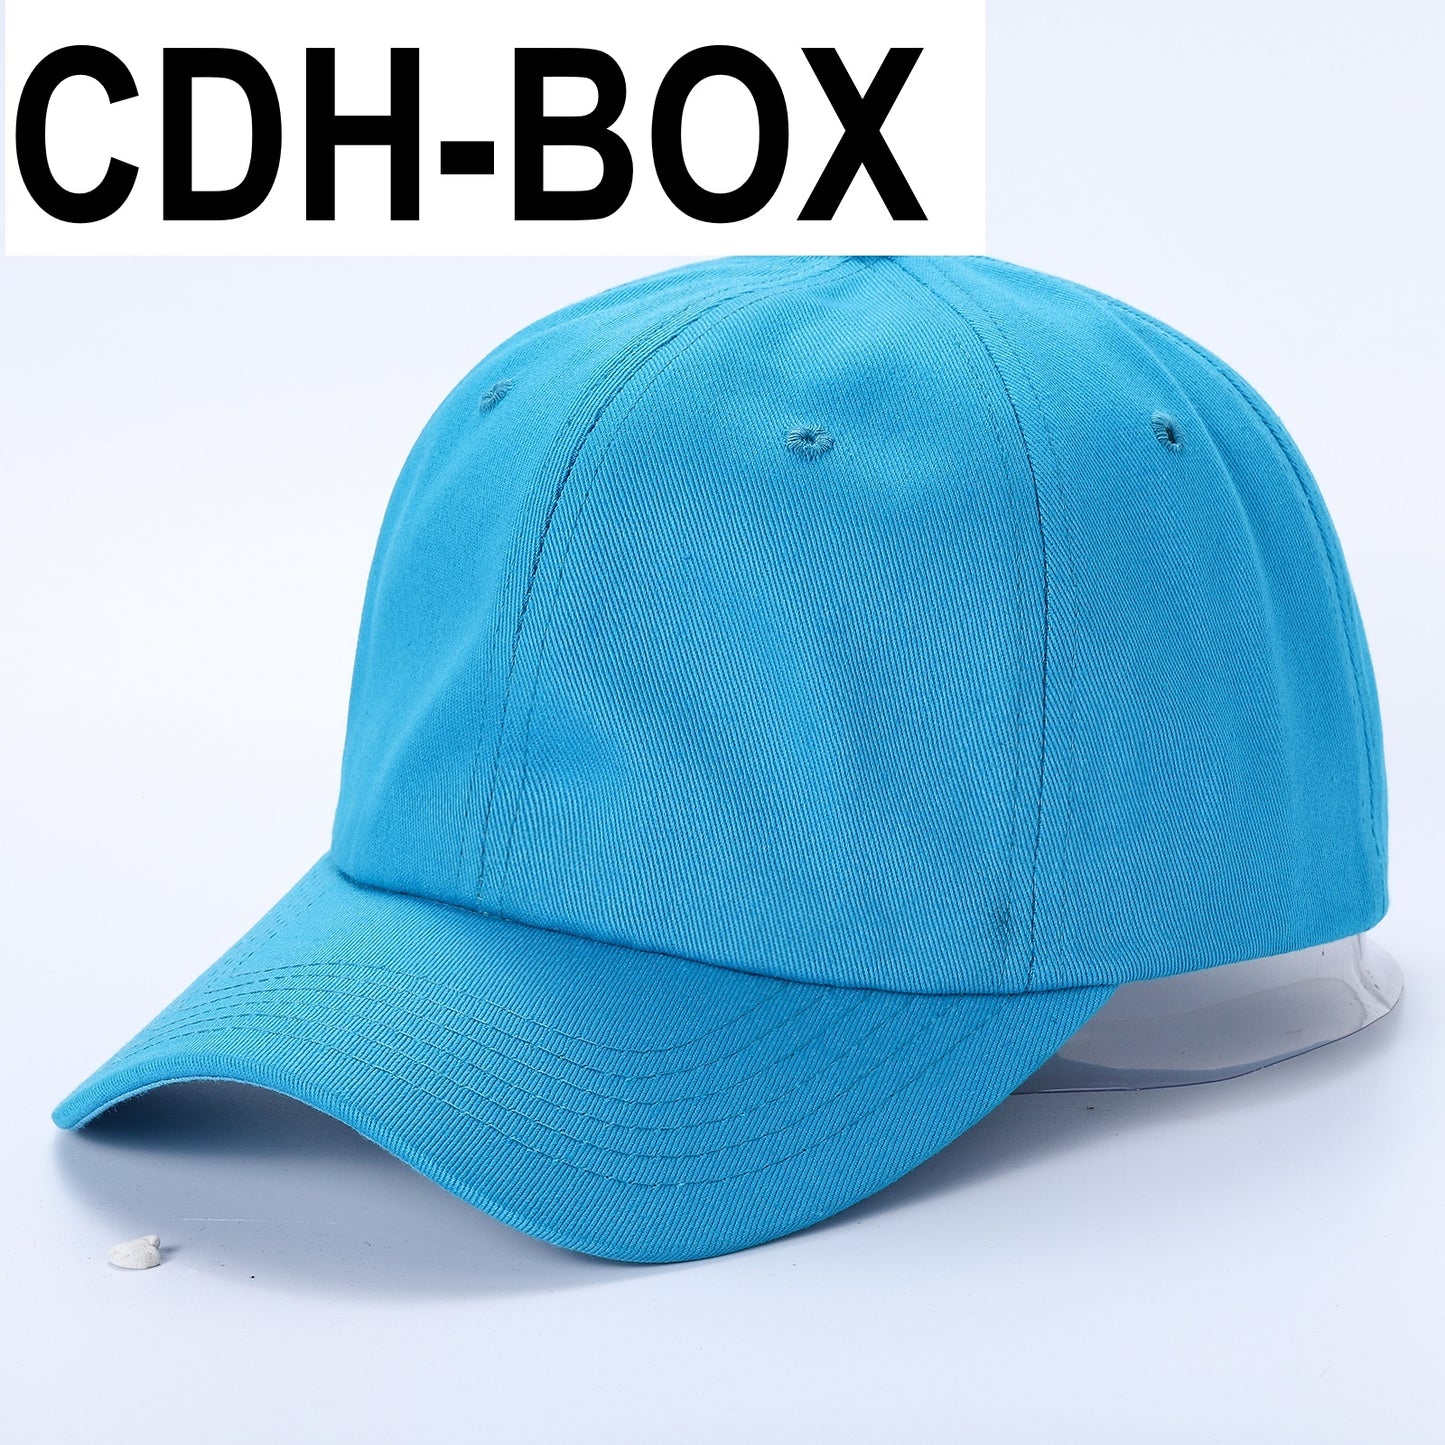 BOX-CDH - Gorro de algodón para papá - $396 / CAJA (1 CAJA = 18DZ = 216 PCS) - $22/DZ 